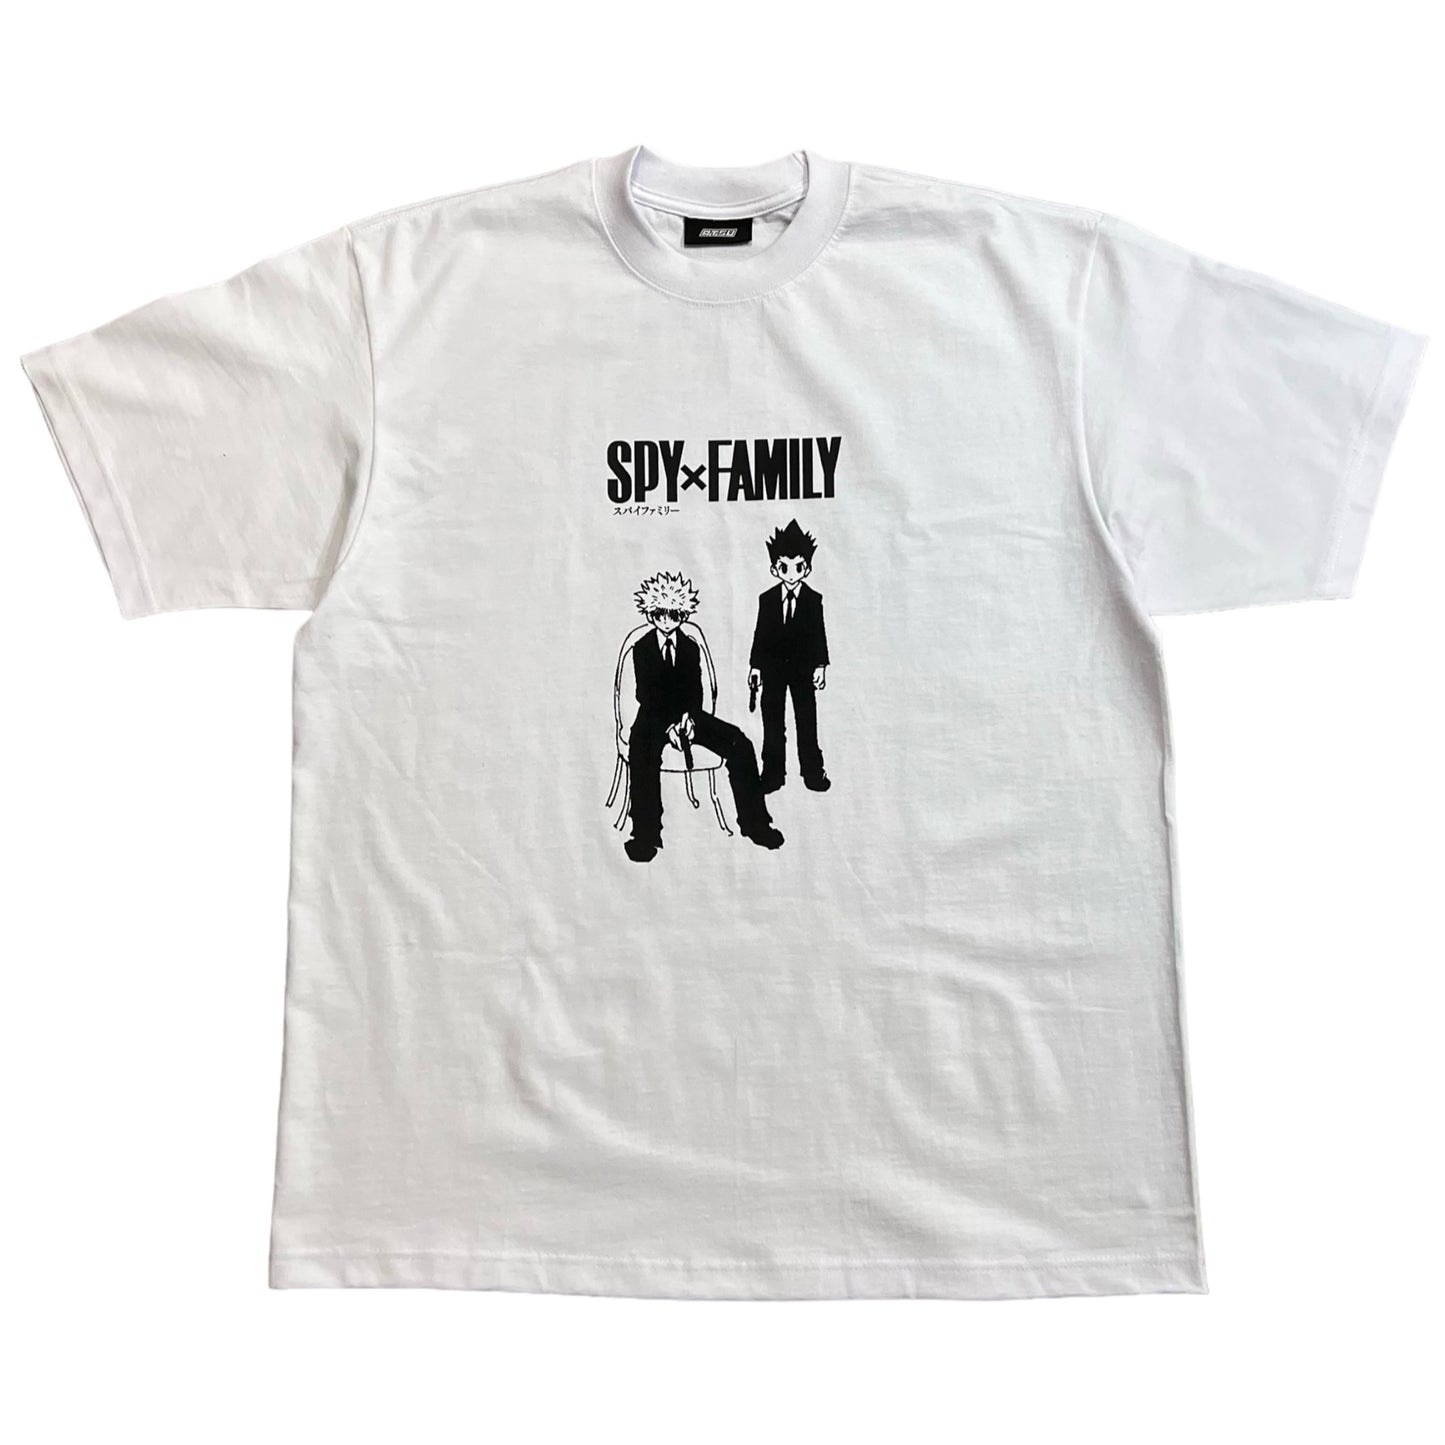 “Spy Family” Shirt